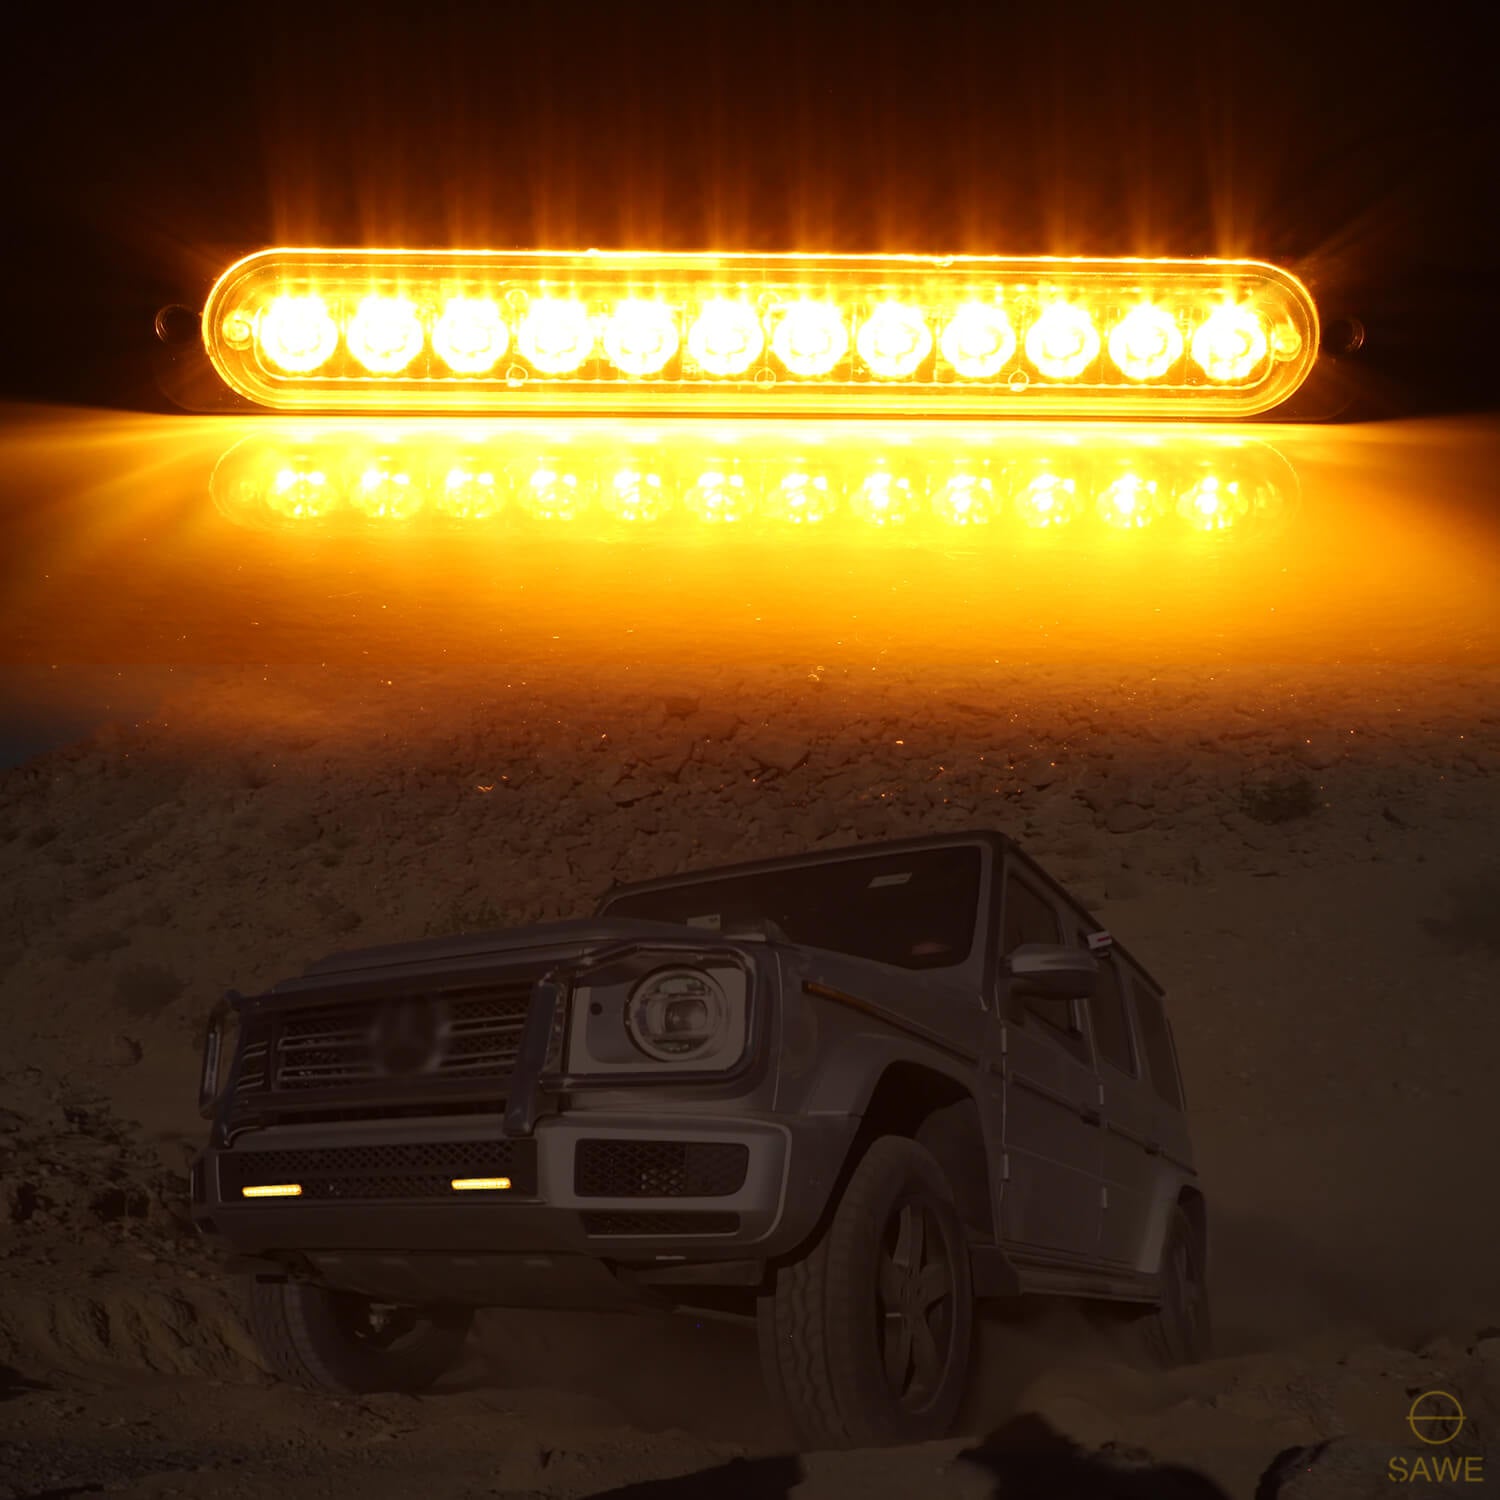 Emergency LED Strobe Lights Bar for Offroad Car Truck Warning Hazard Flash Grille and Surface Mount Light - Amber 12-LED